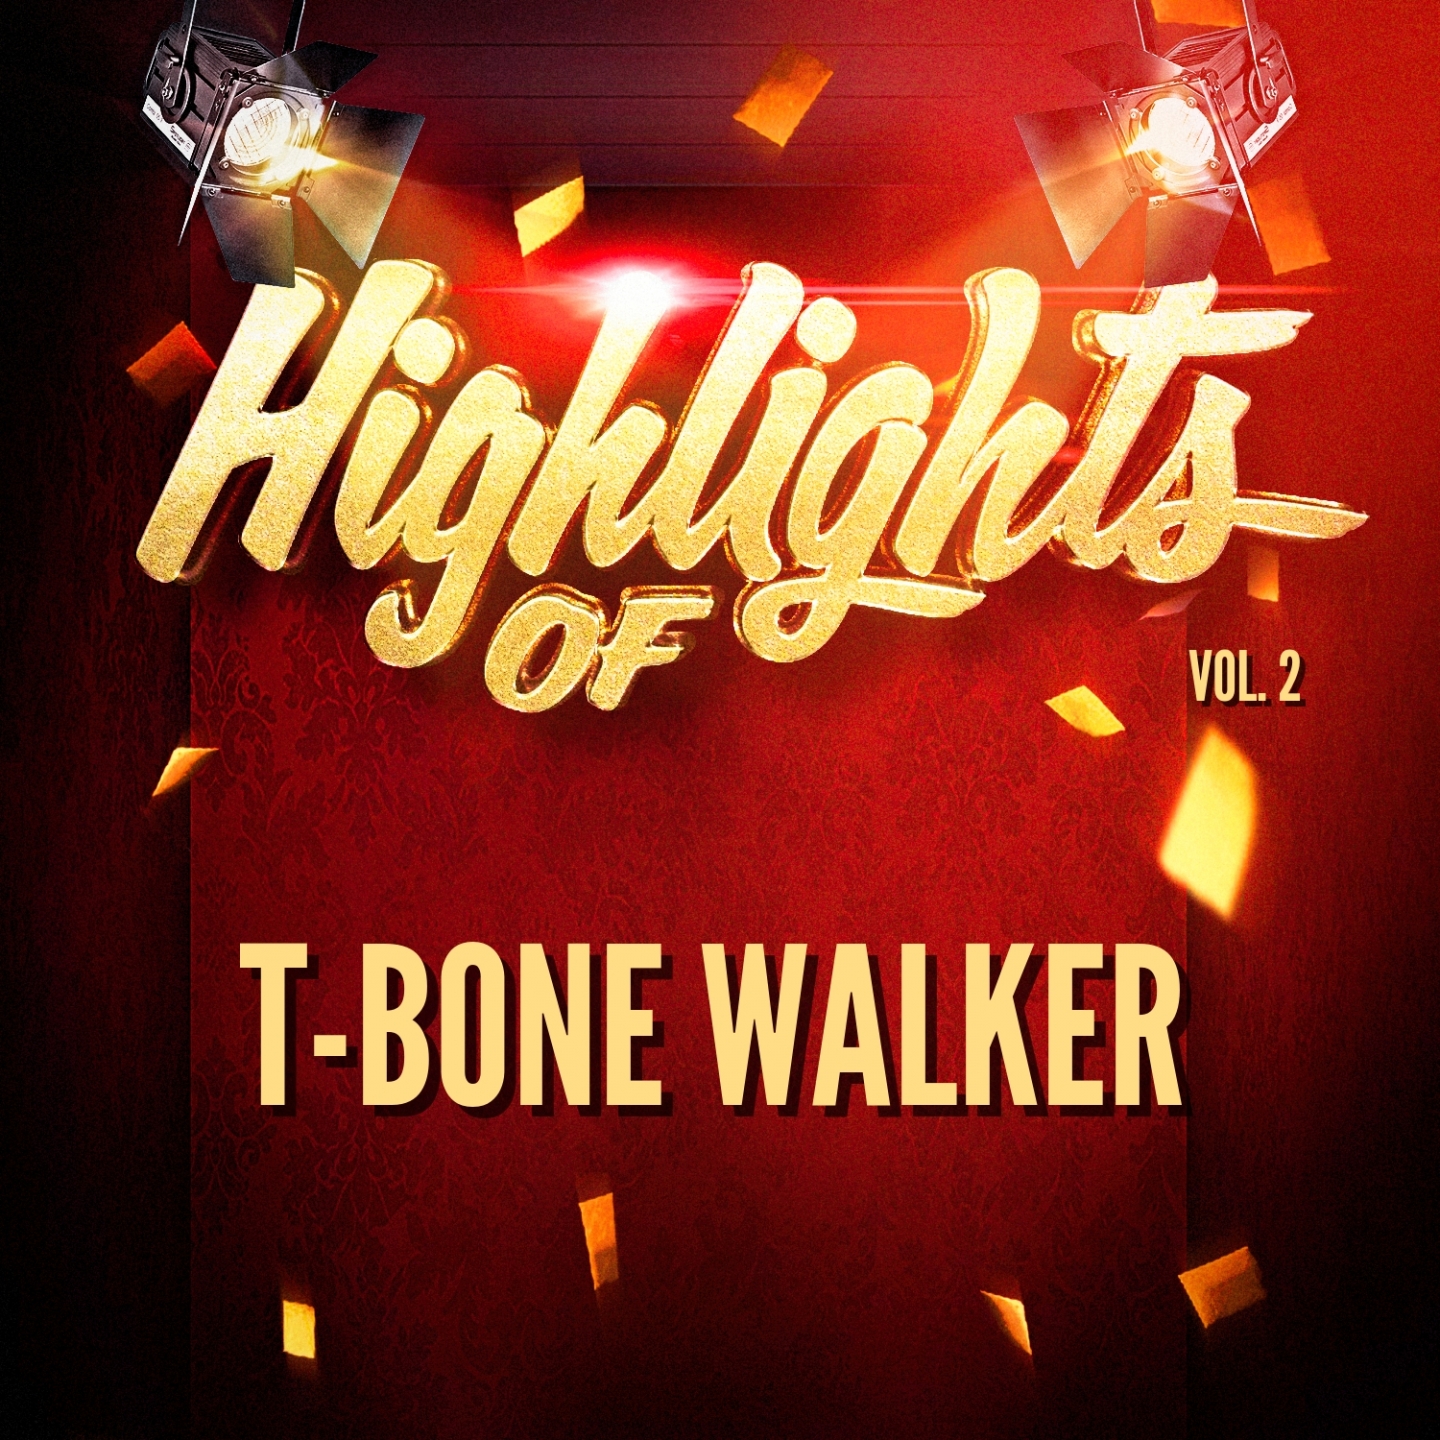 Highlights of T-Bone Walker, Vol. 2